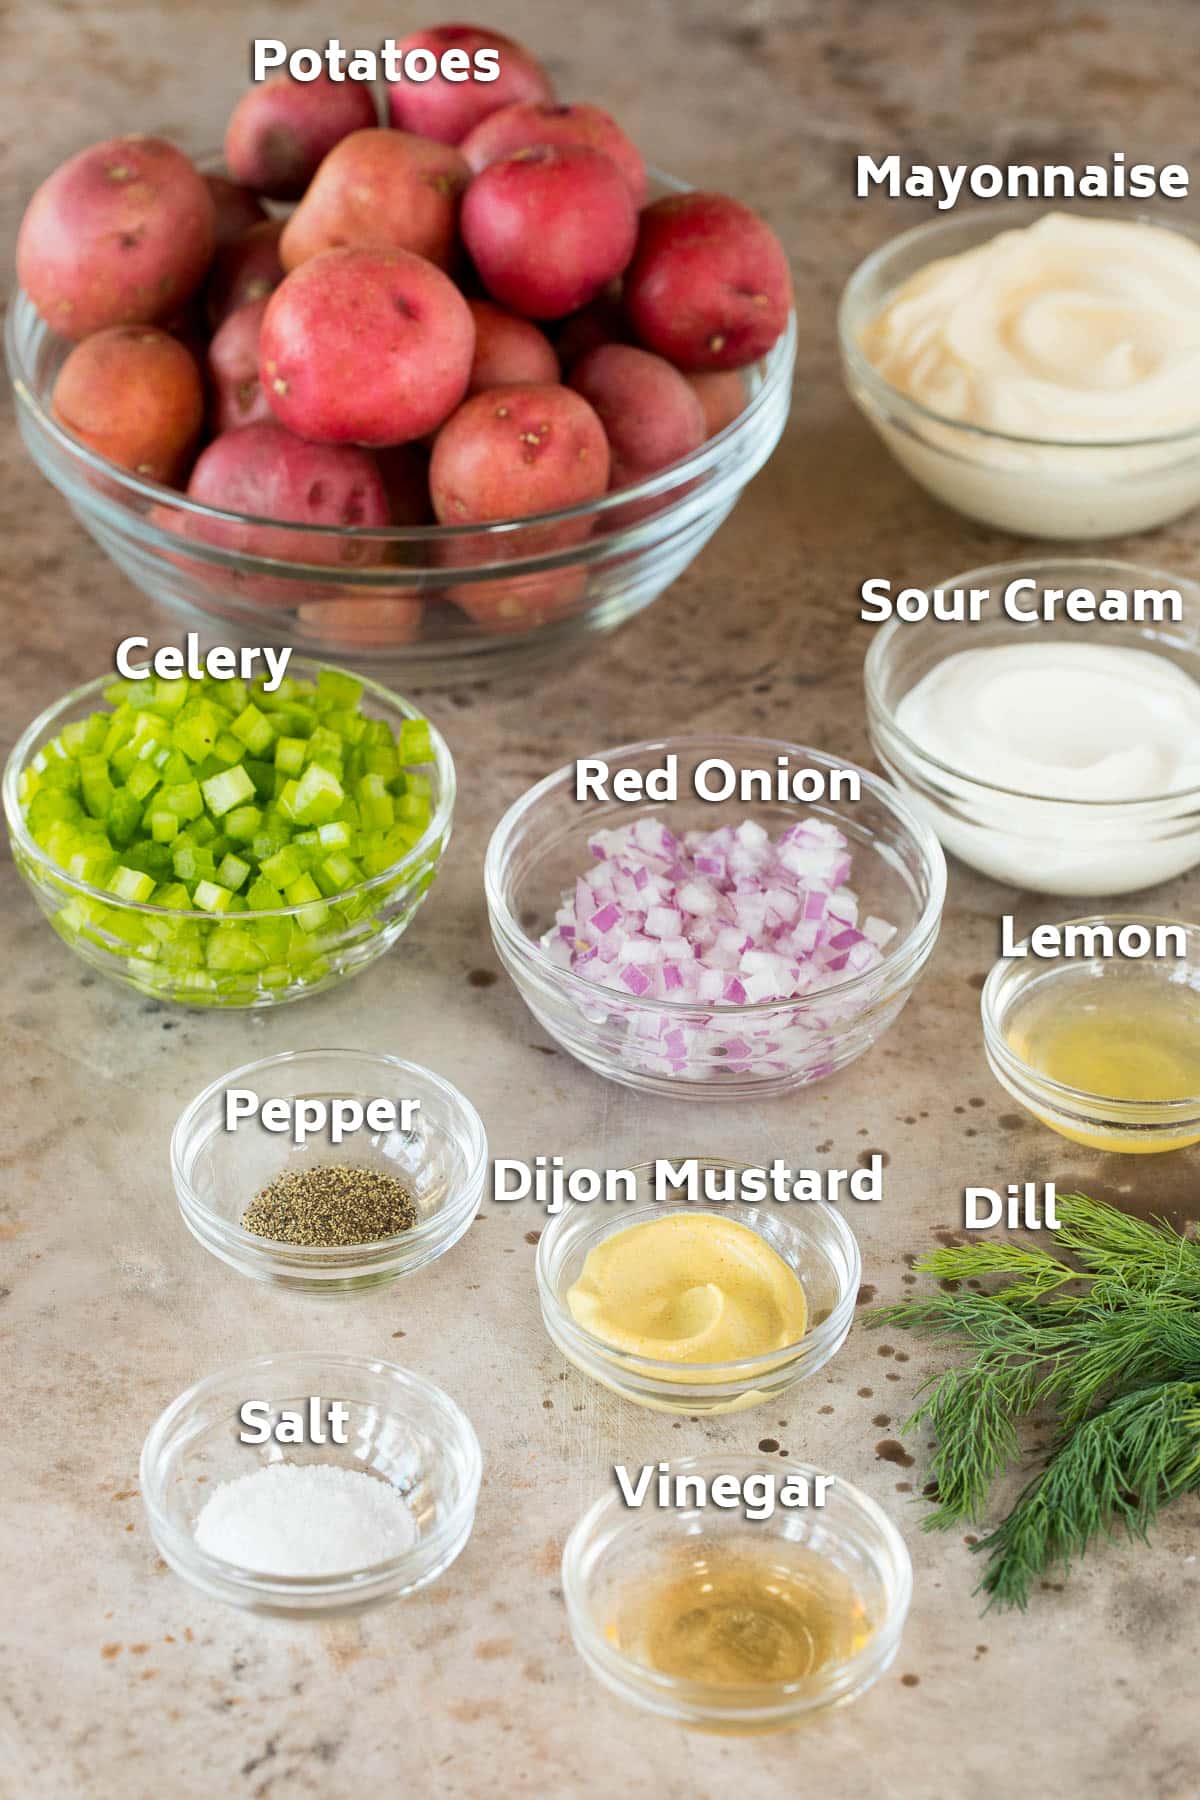 Bowls of ingredients including potatoes, vegetables, mayonnaise and seasonings.